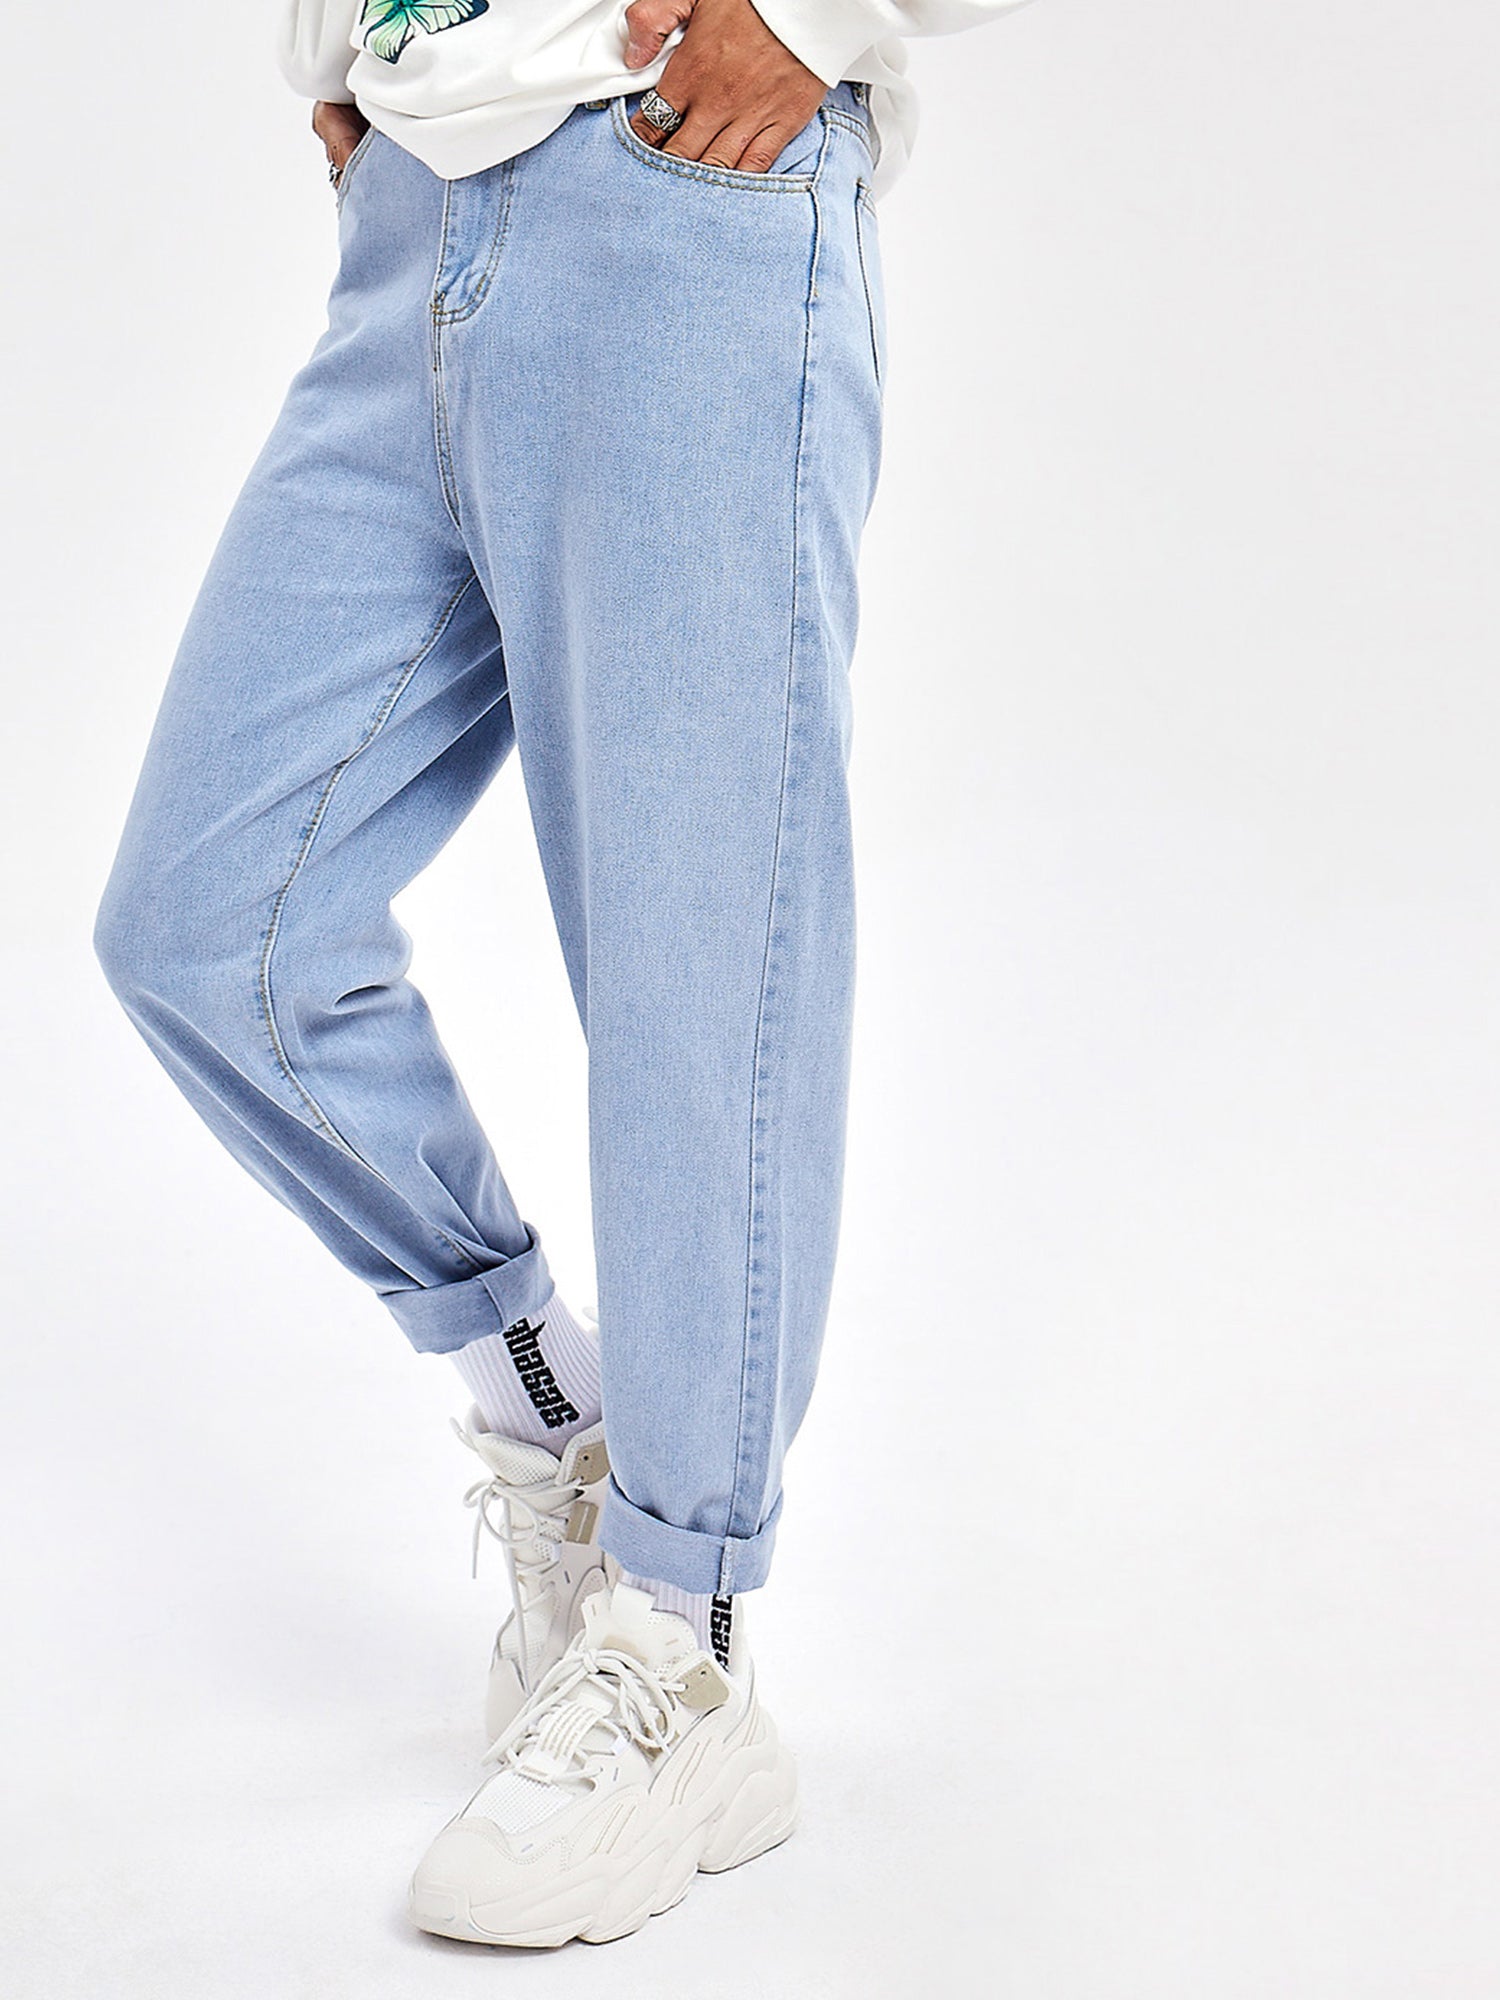 JUSTNOTAG Casual Street HipHop Print LightBlue Long Loose Jeans